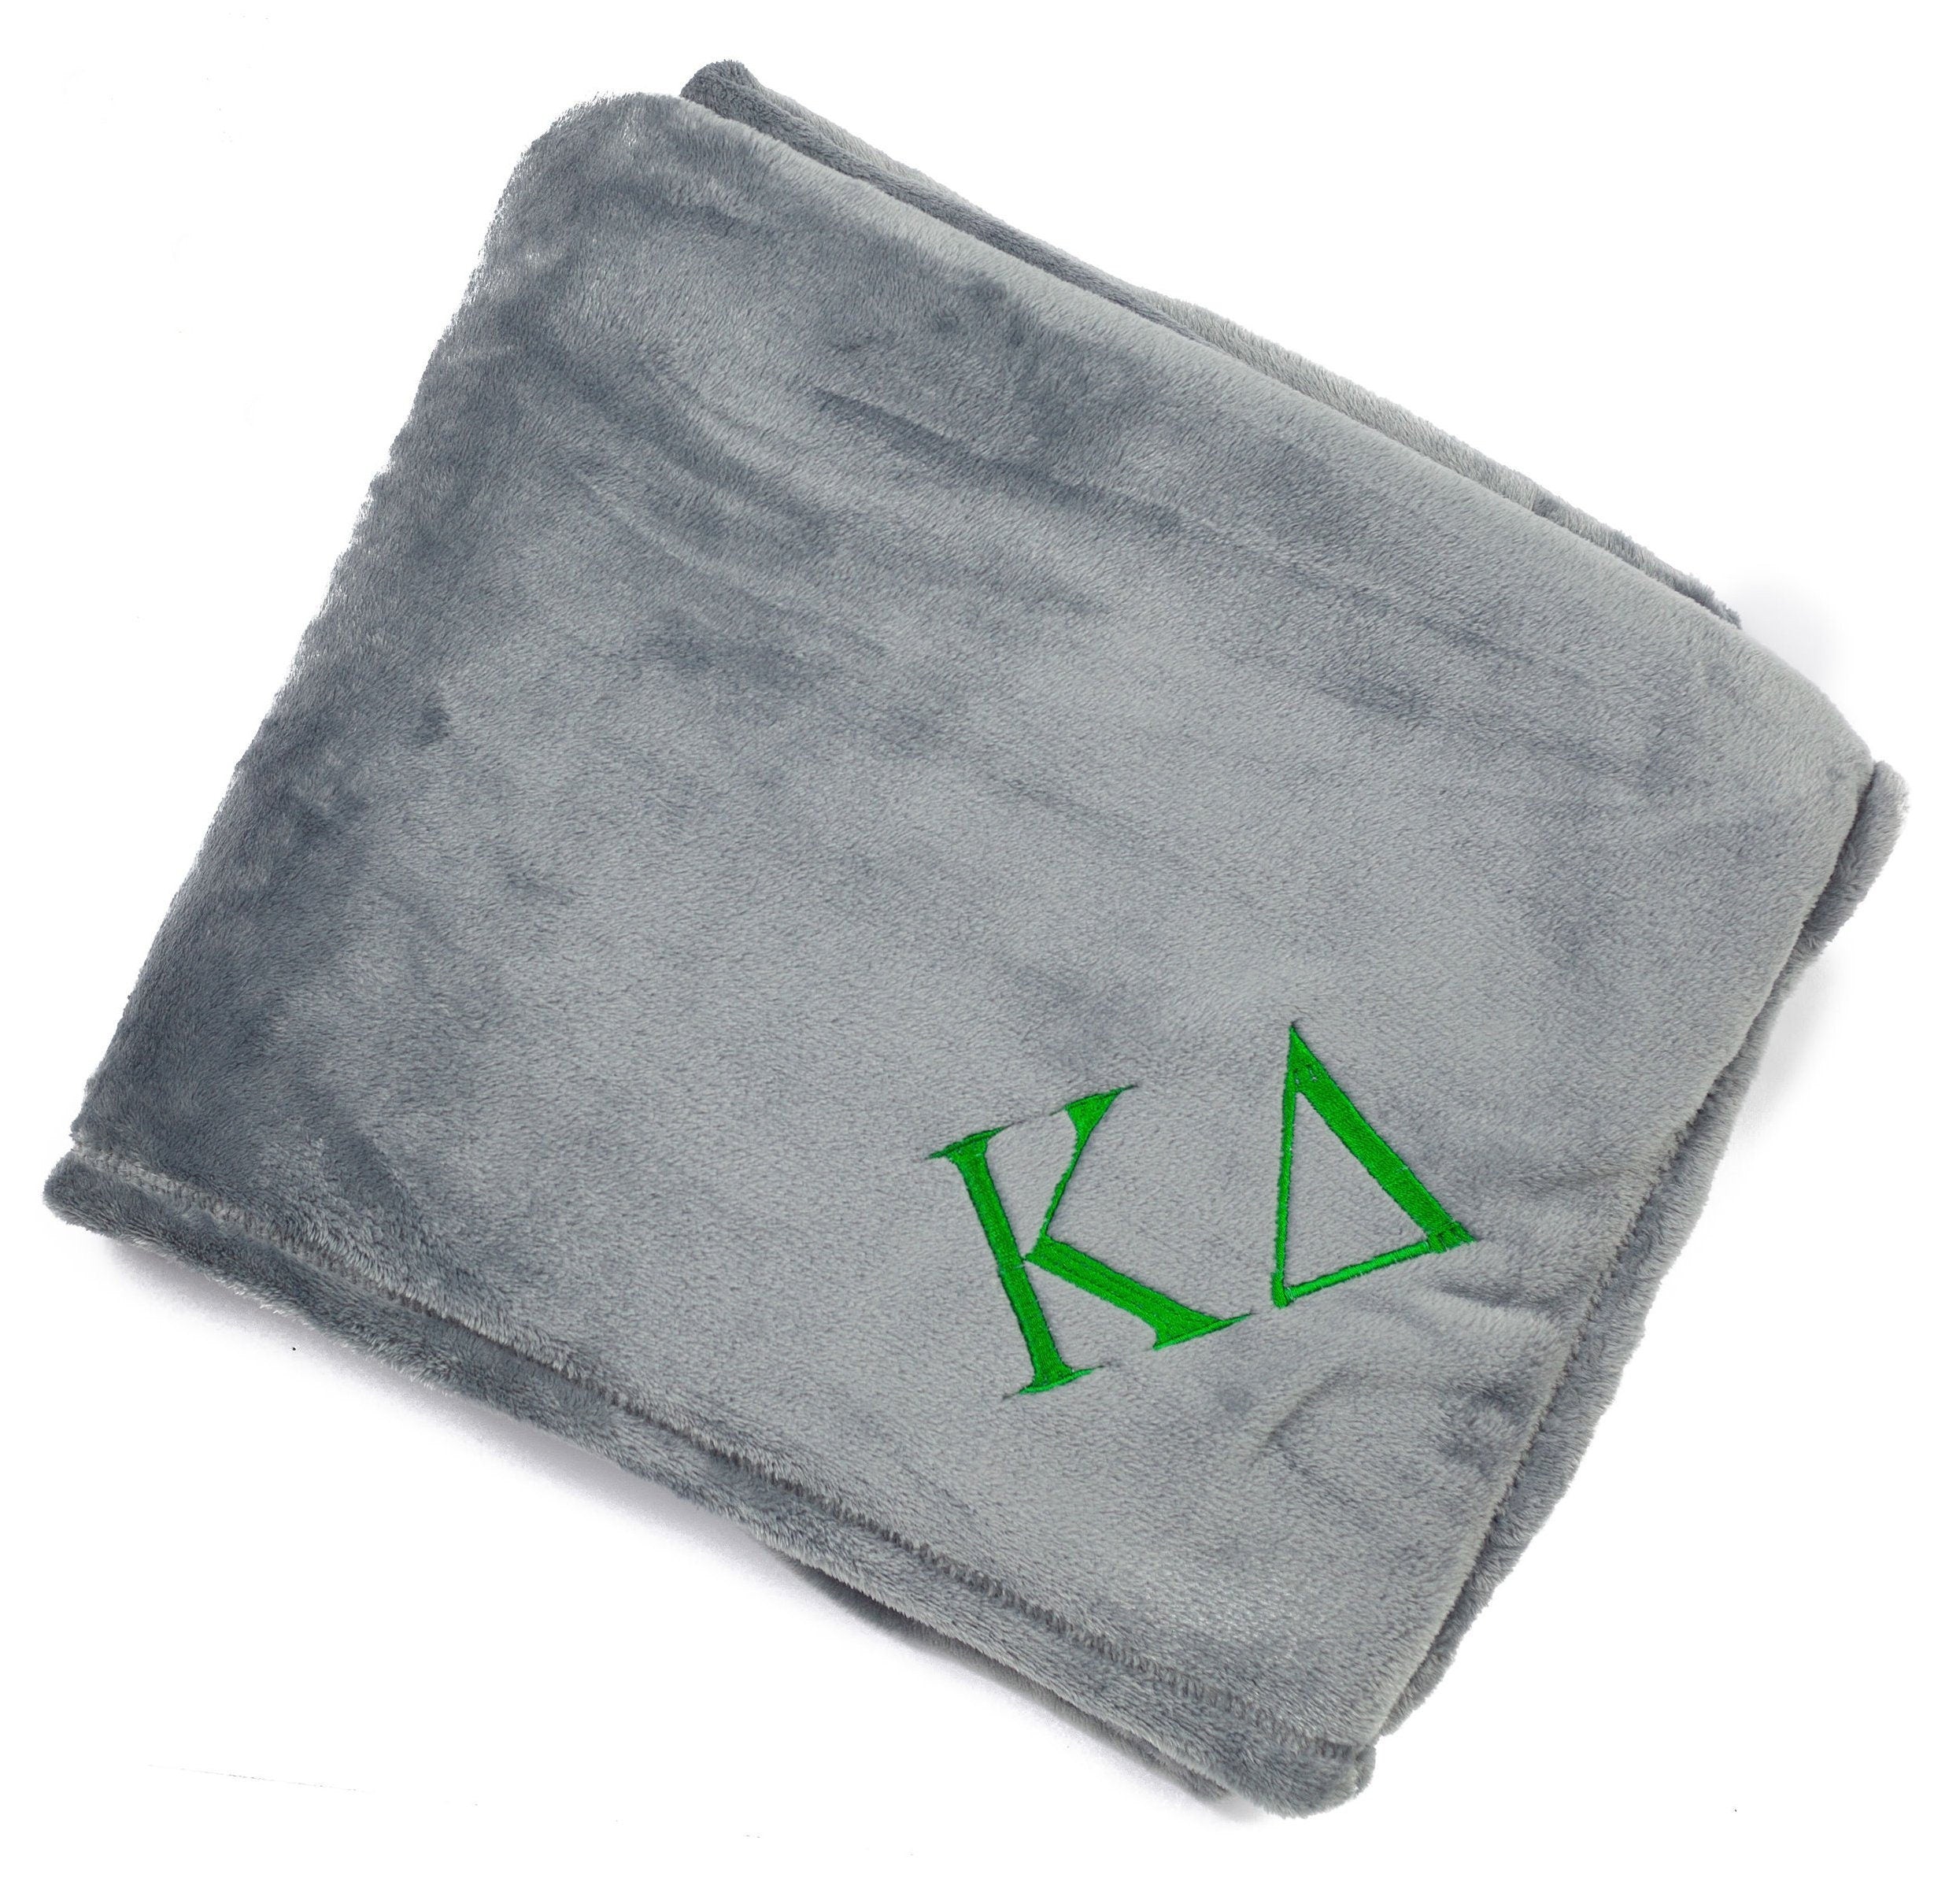 Kappa Delta Plush Throw Blanket - Grey/Green - Go Greek Chic